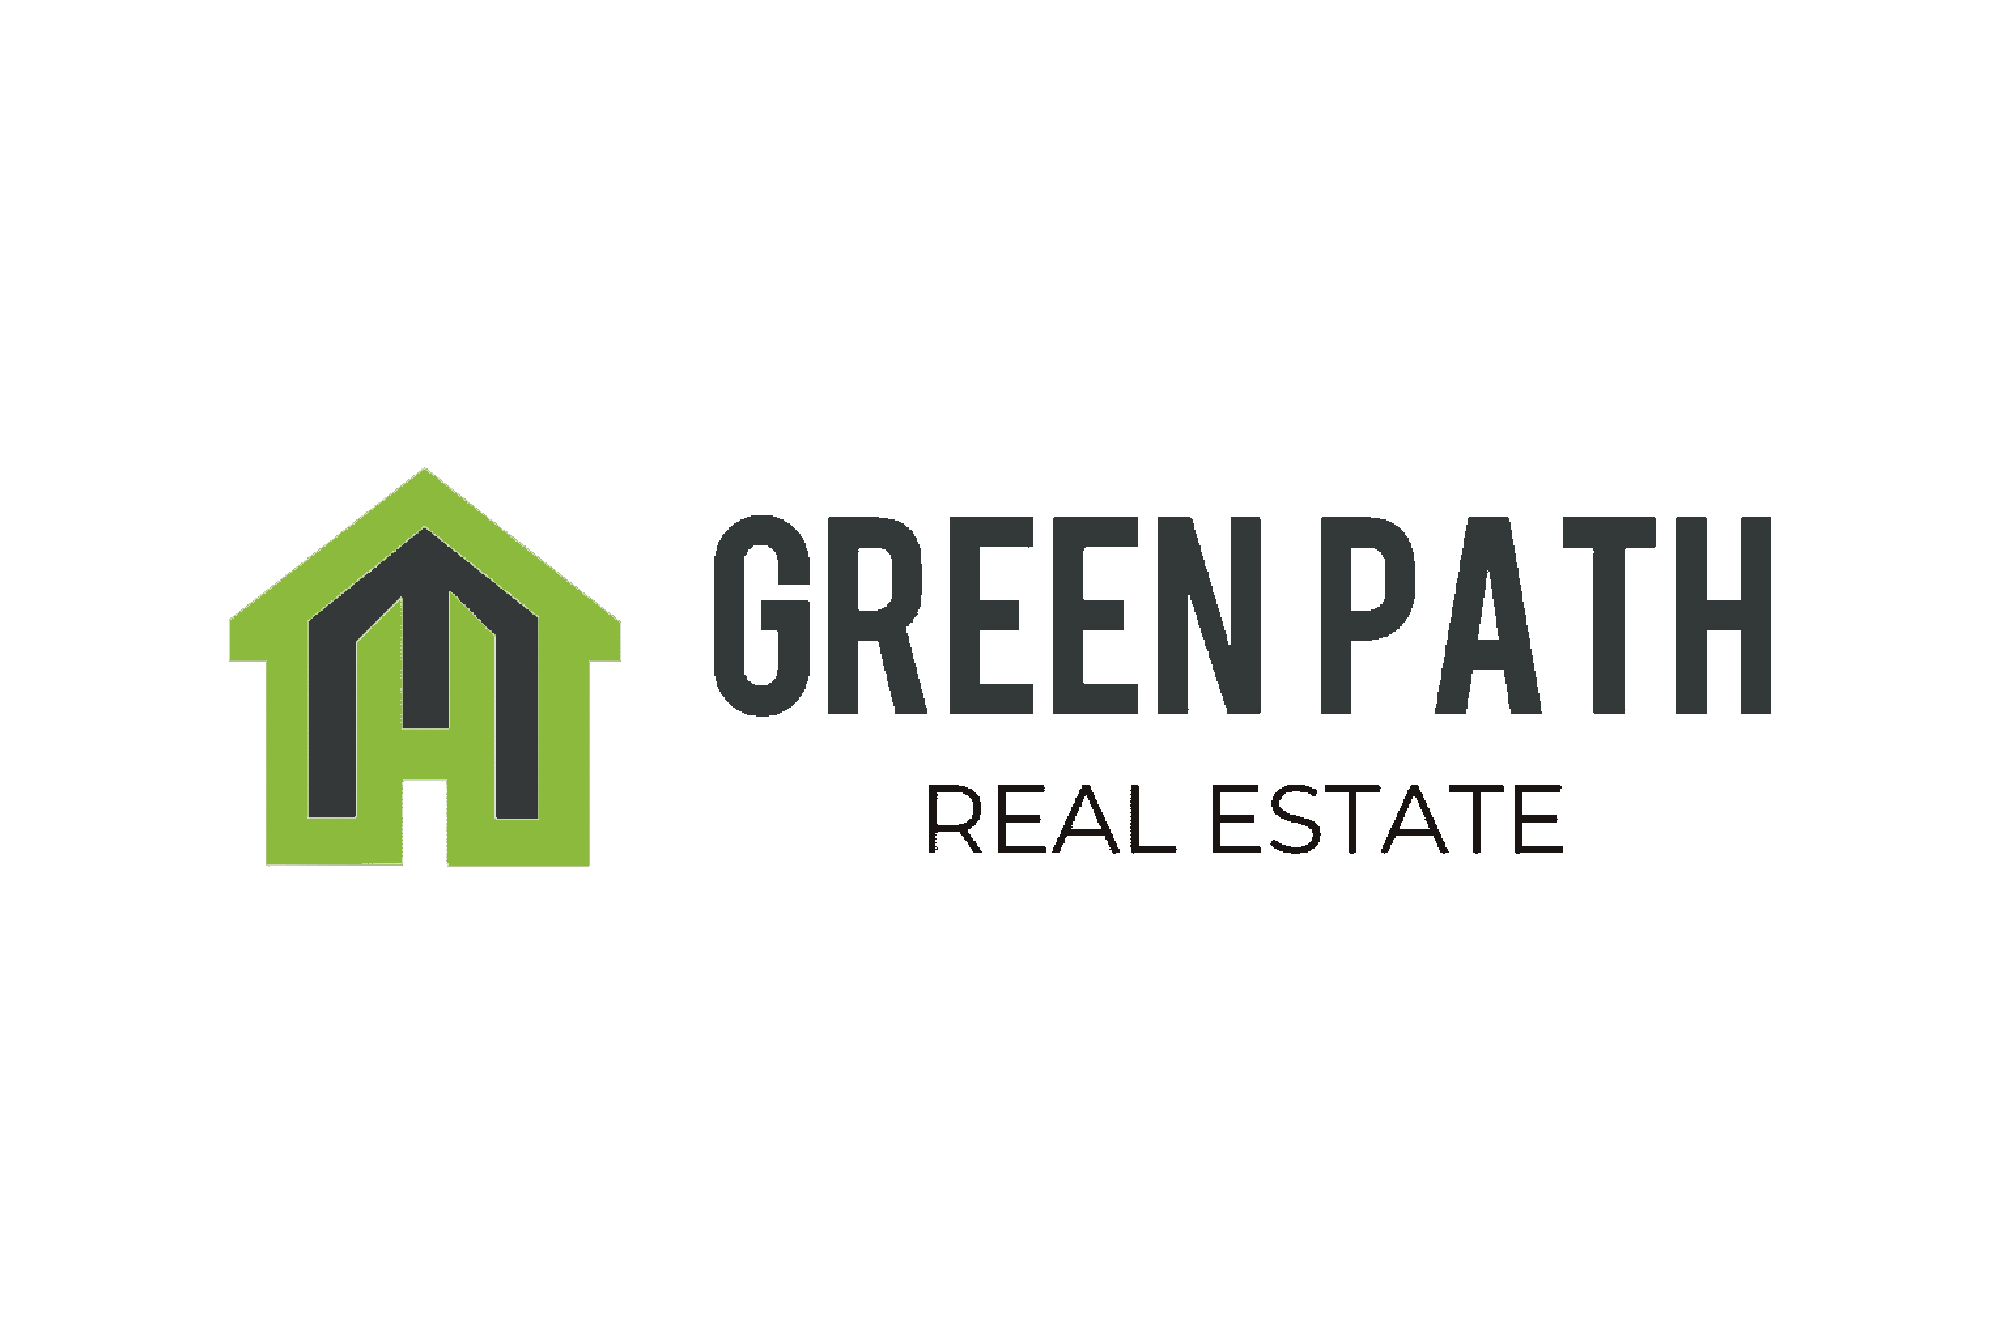 Green Path Real Estate